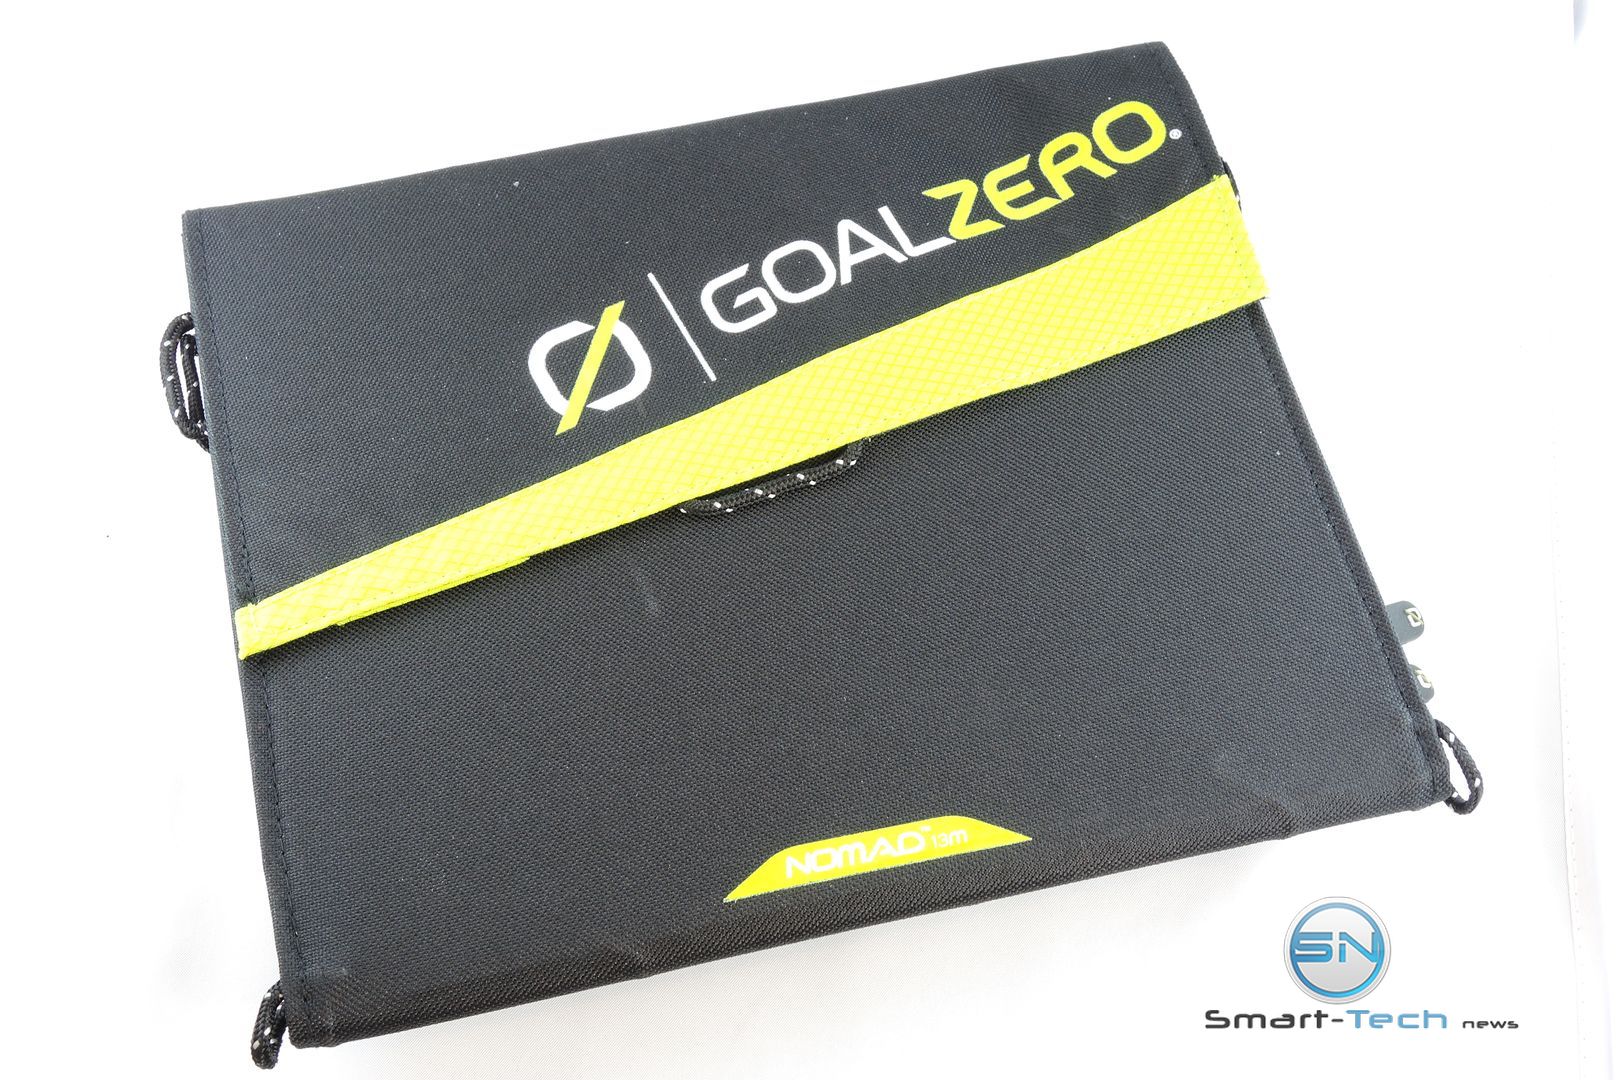 gut verpackt - GoalZero 13 mit PowerBank - SmartTechNews